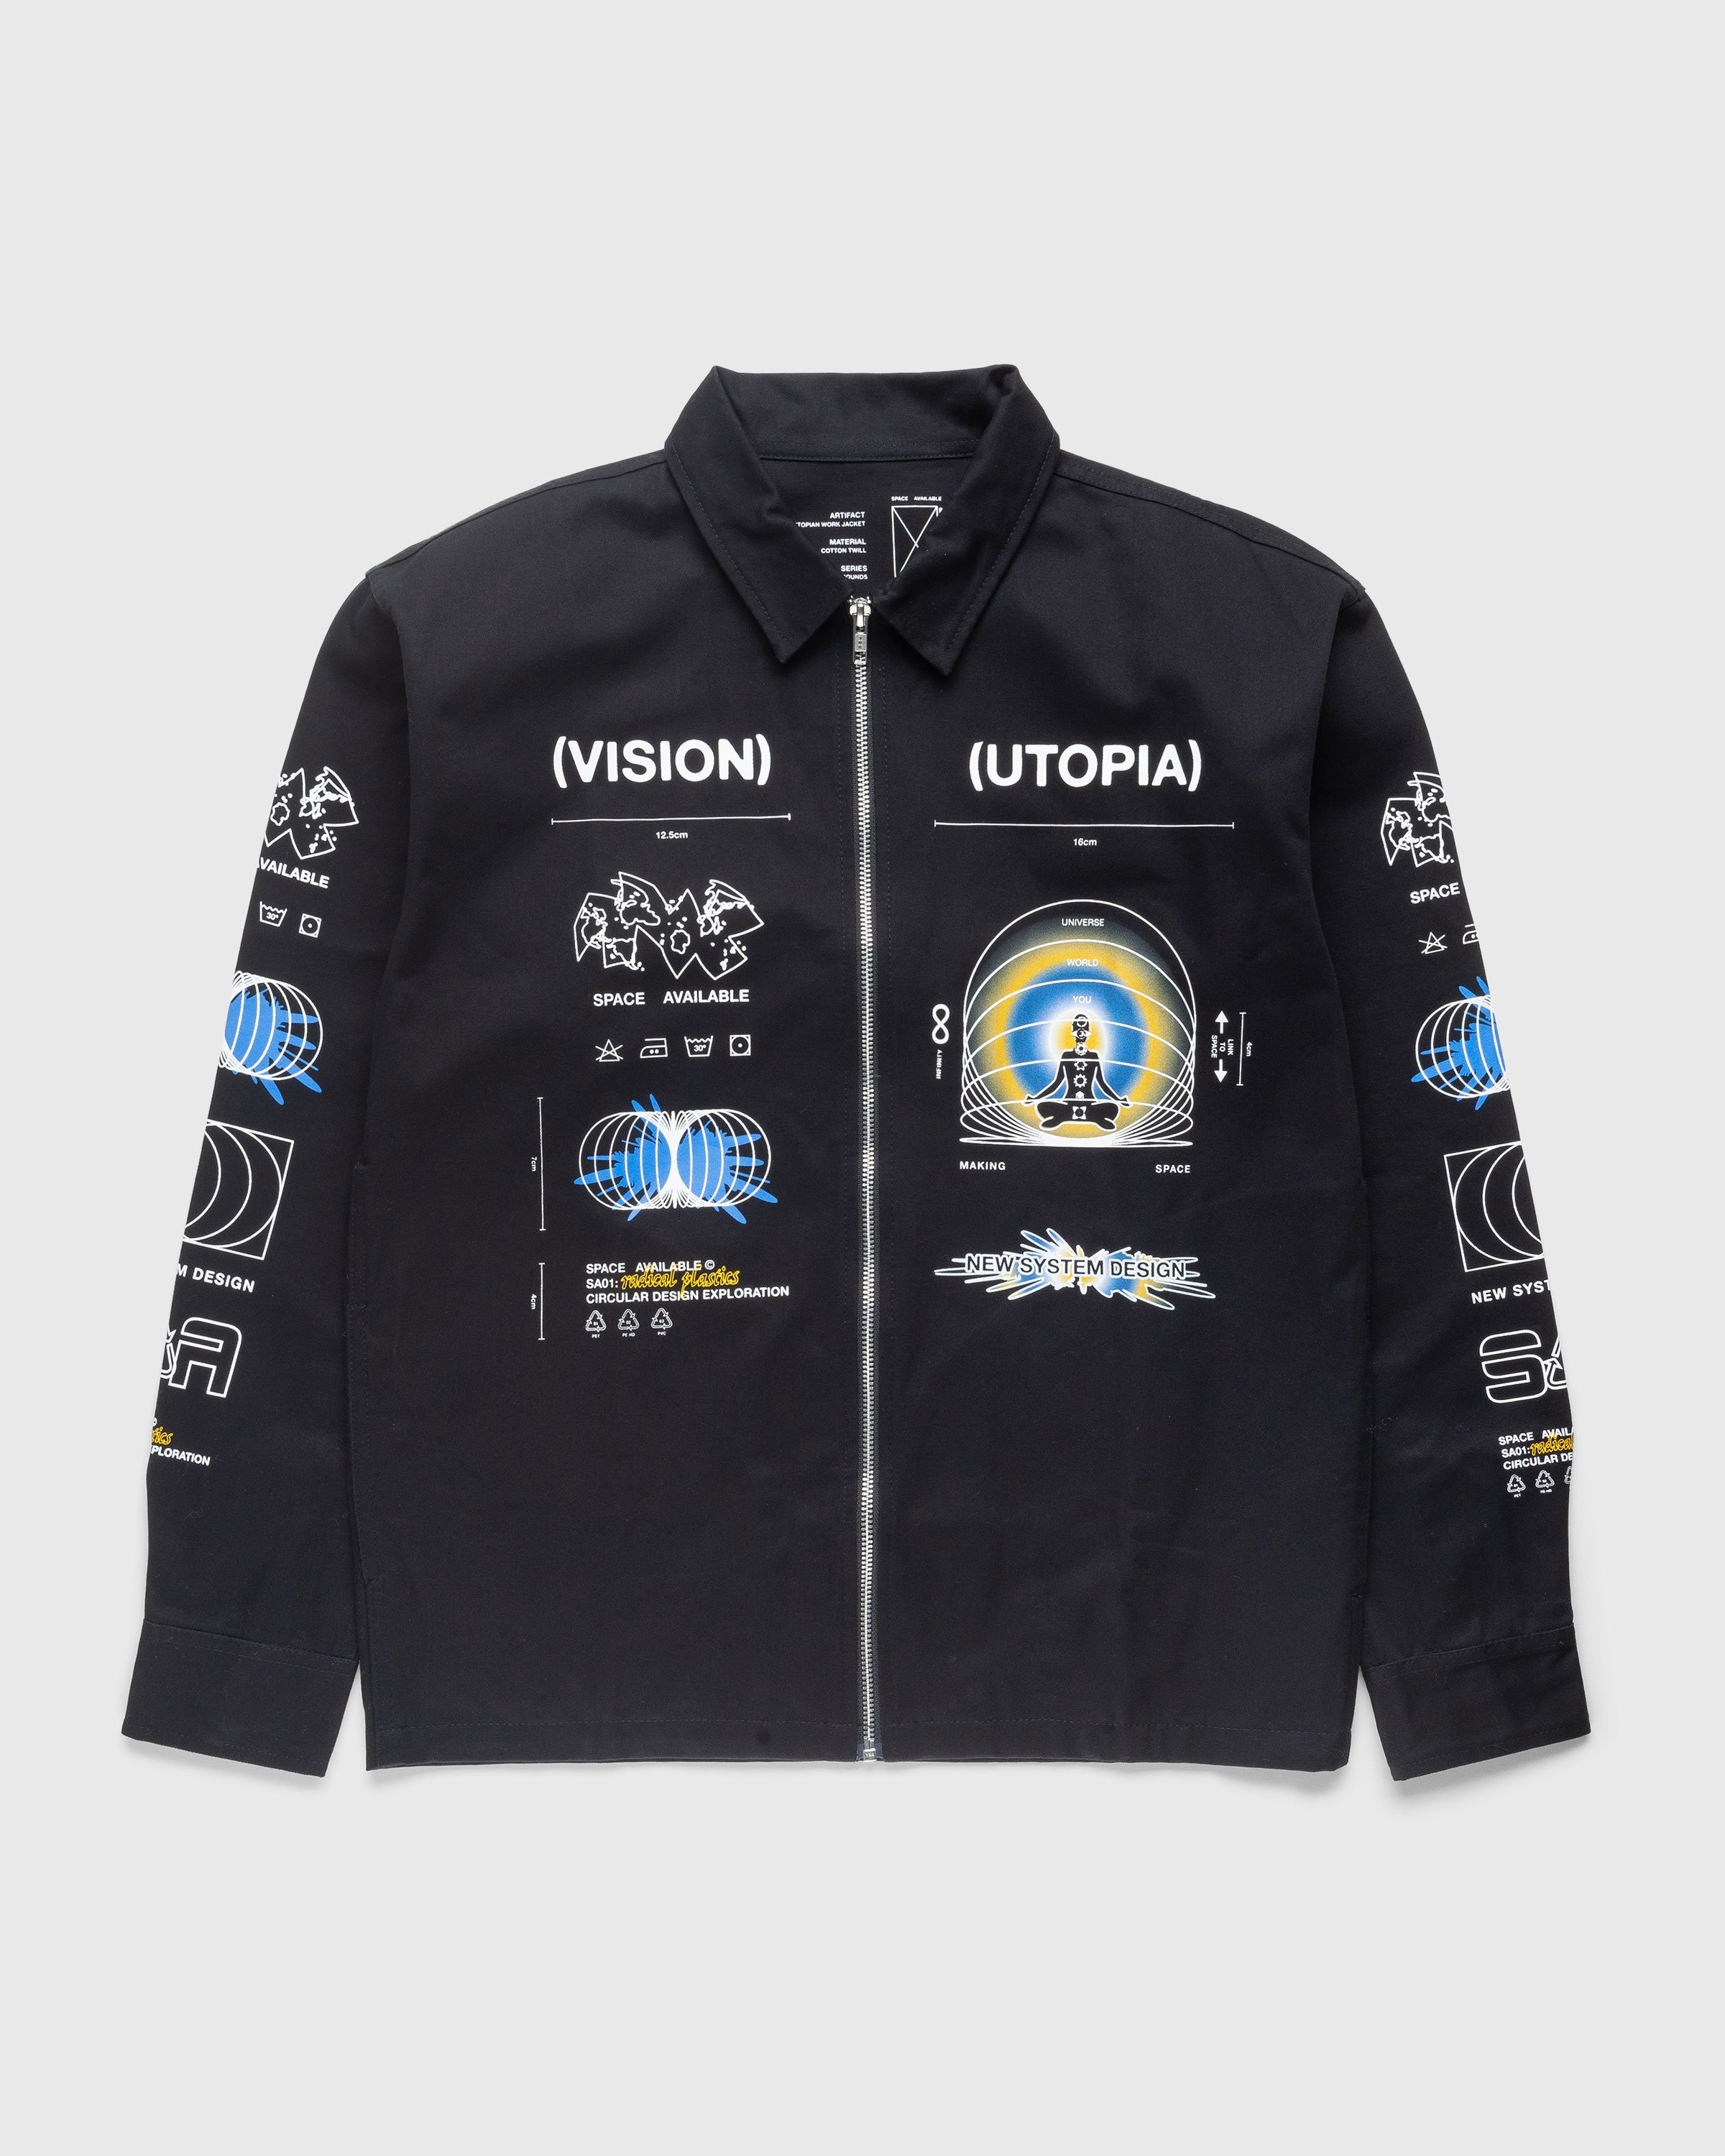 Space Available Studio - Utopia Work Jacket Black - Clothing - Black - Image 1